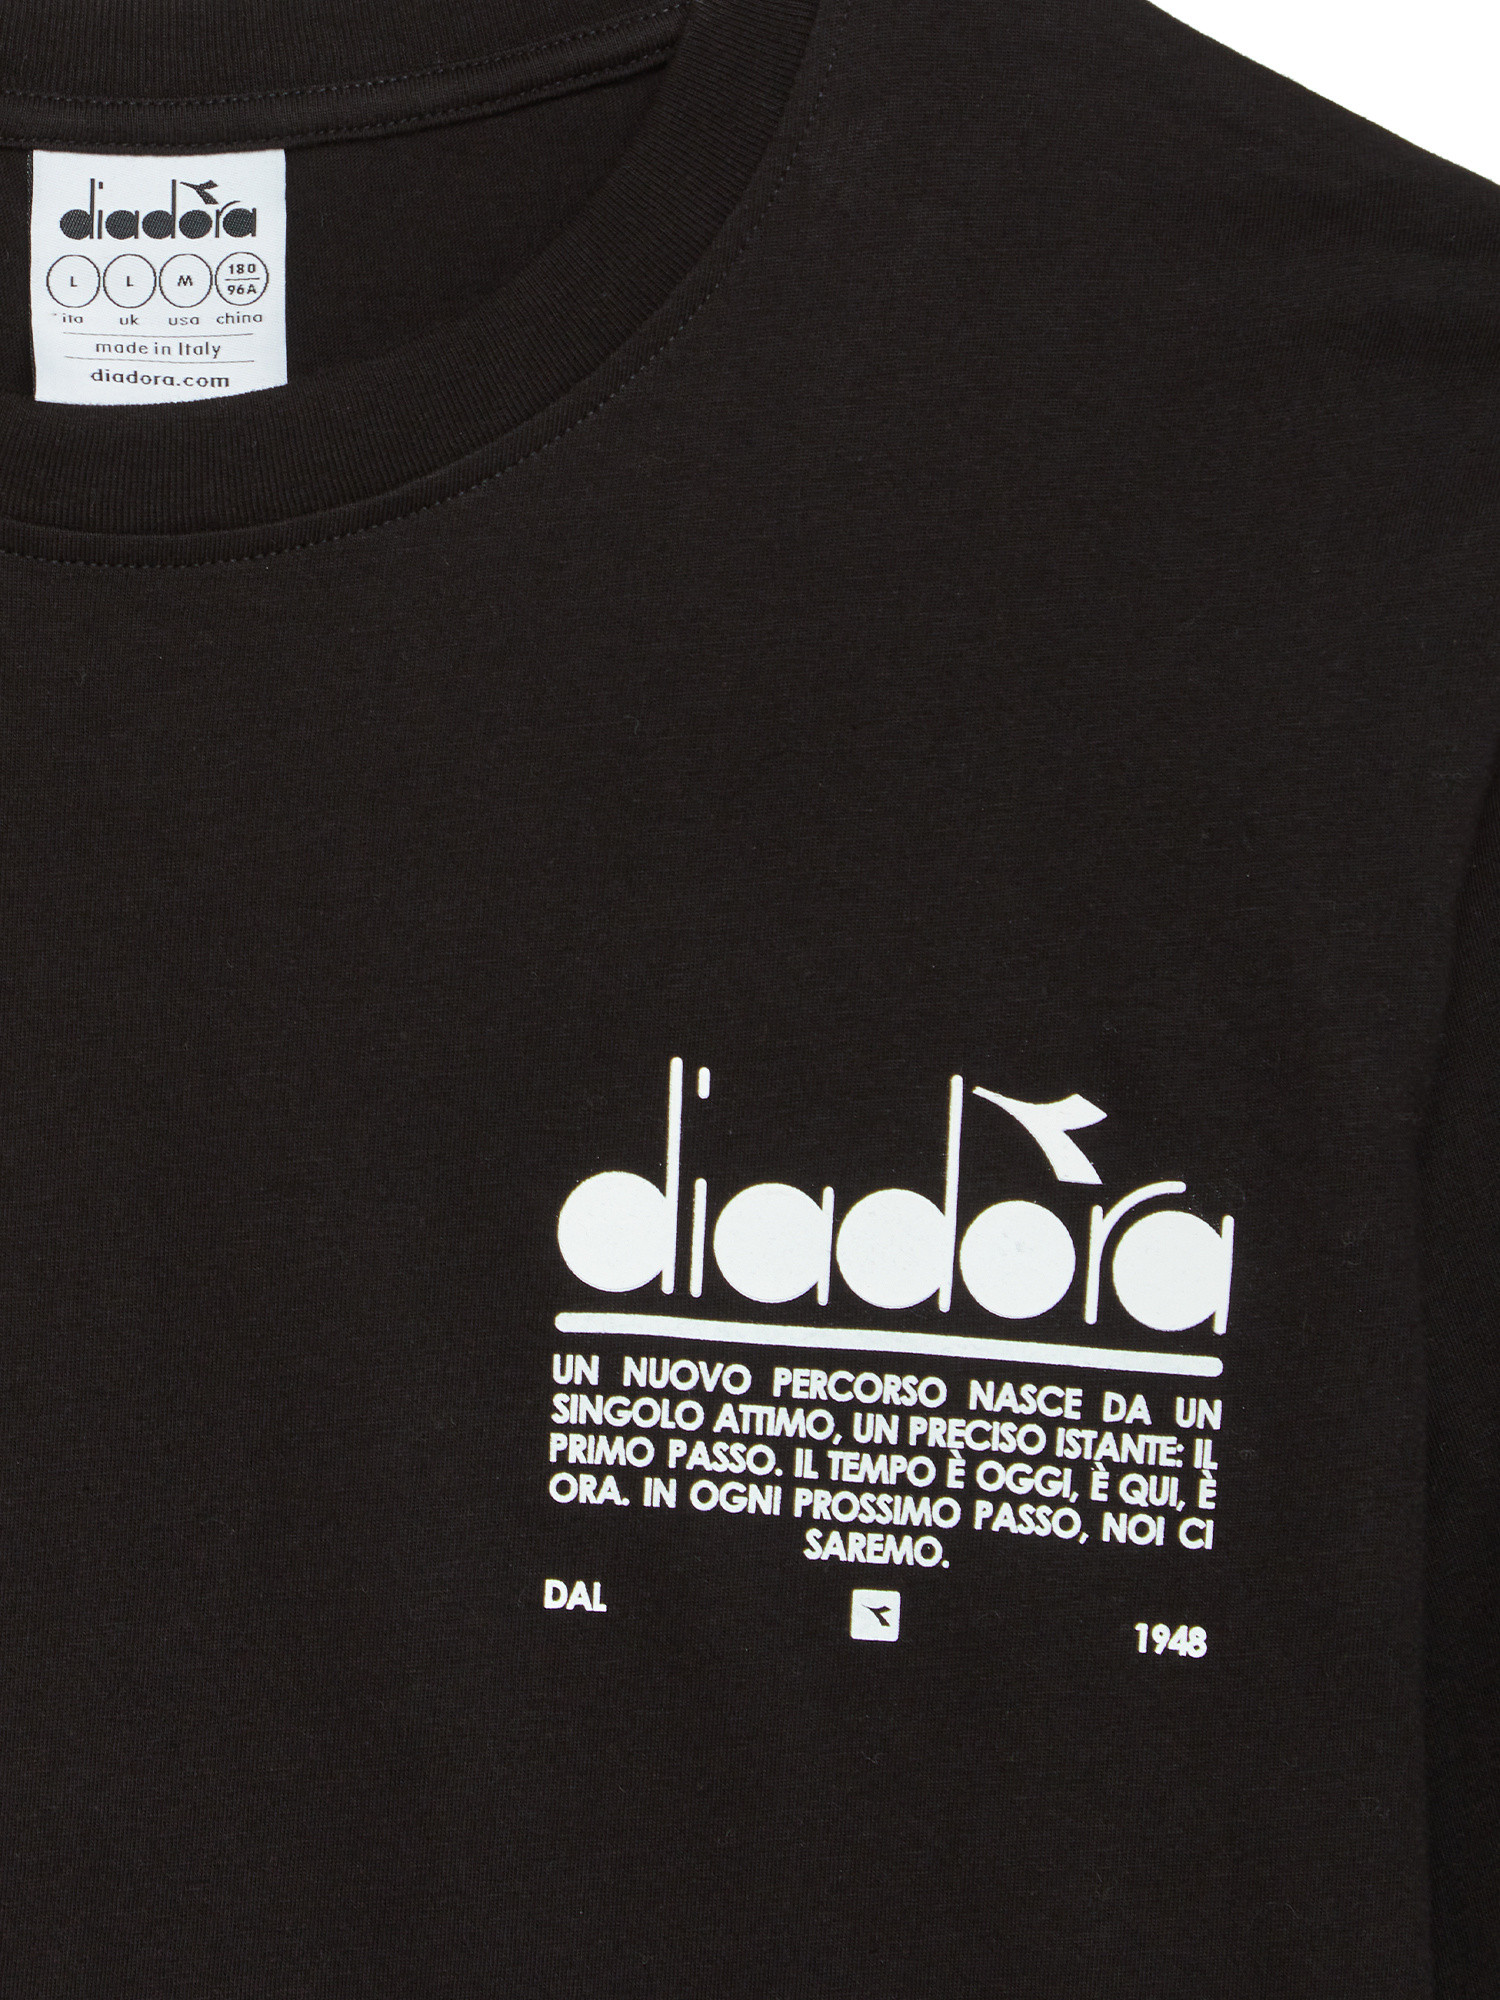 Diadora - T-shirt girocollo Manifesto in cotone, Nero, large image number 1